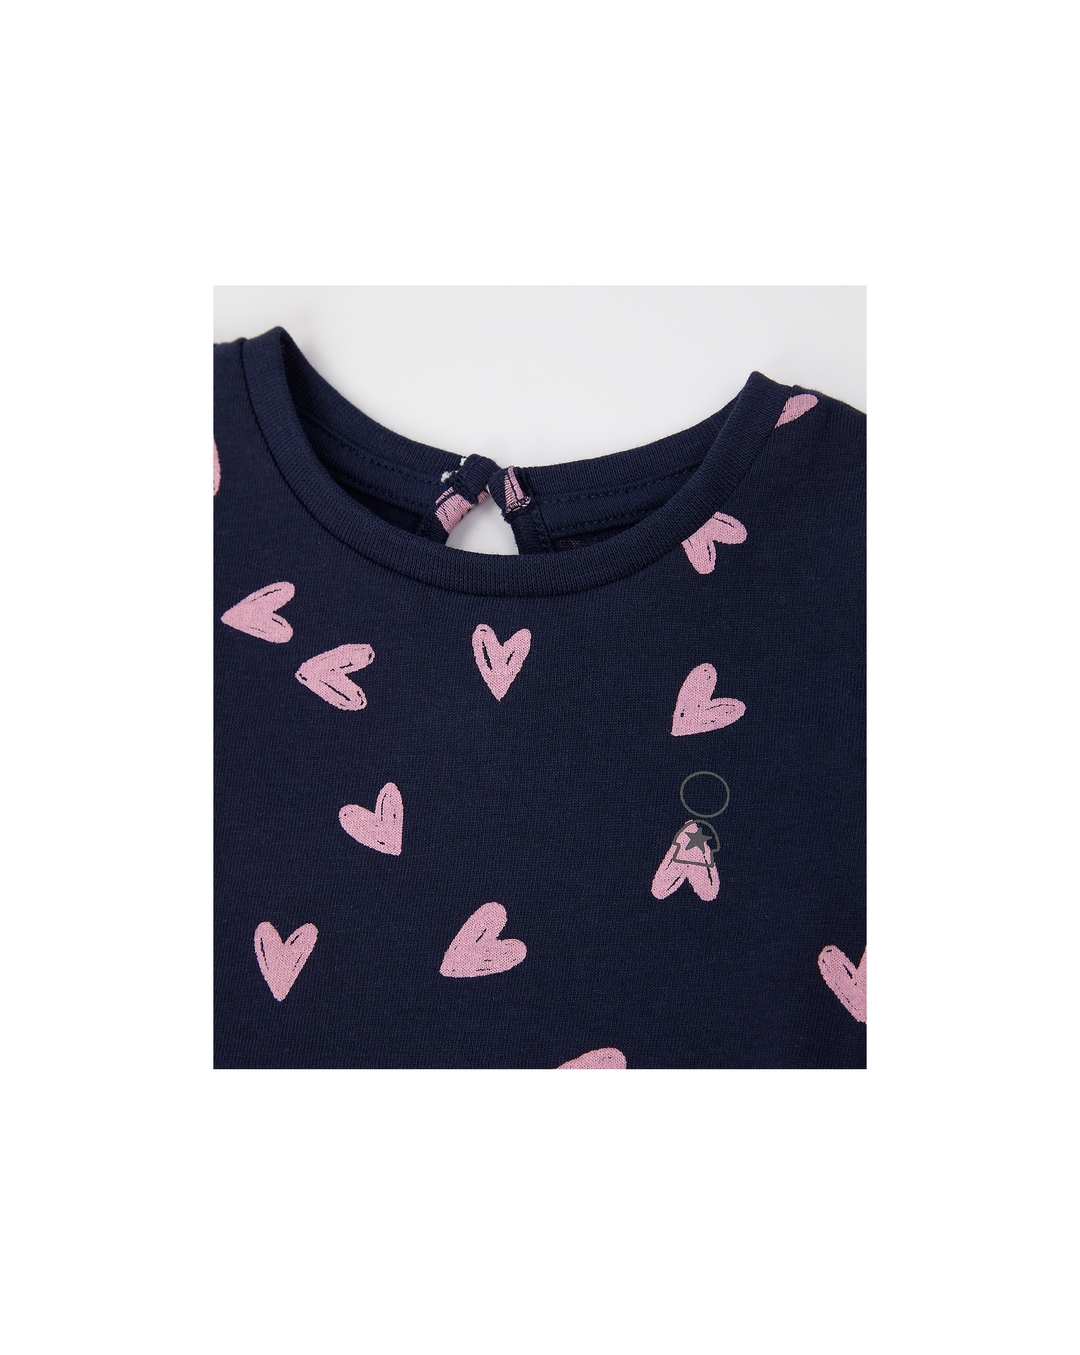 Buy Girls Half Sleeves Dress Heart Print - Navy Online at Best